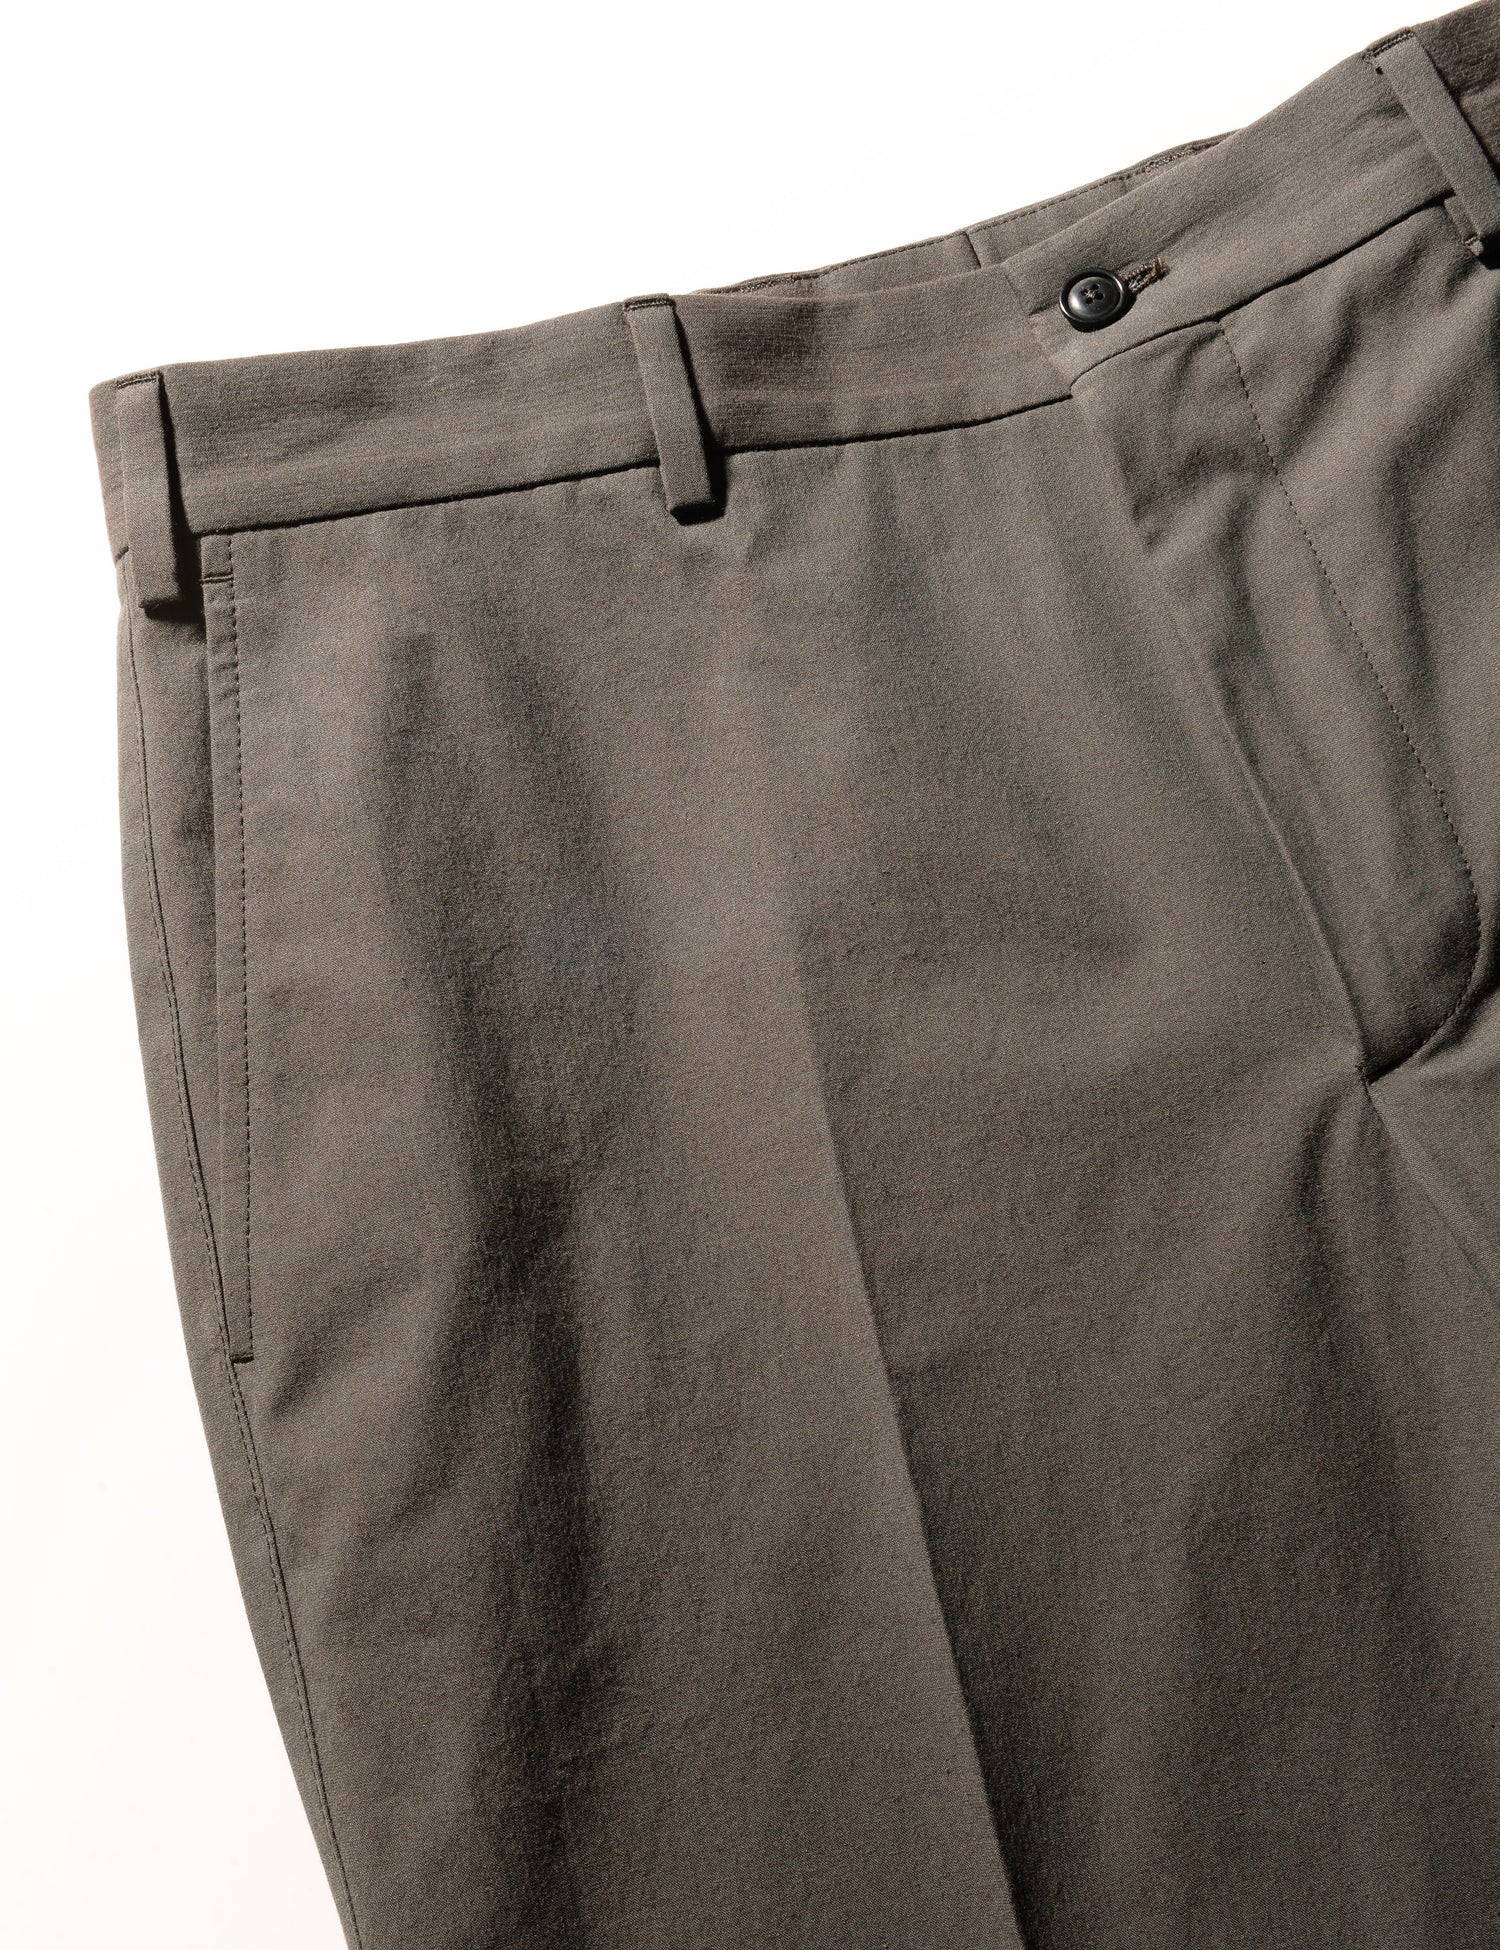 BKT36 Straight Leg Pant in Crisp Cotton Blend - Petrol – Brooklyn Tailors